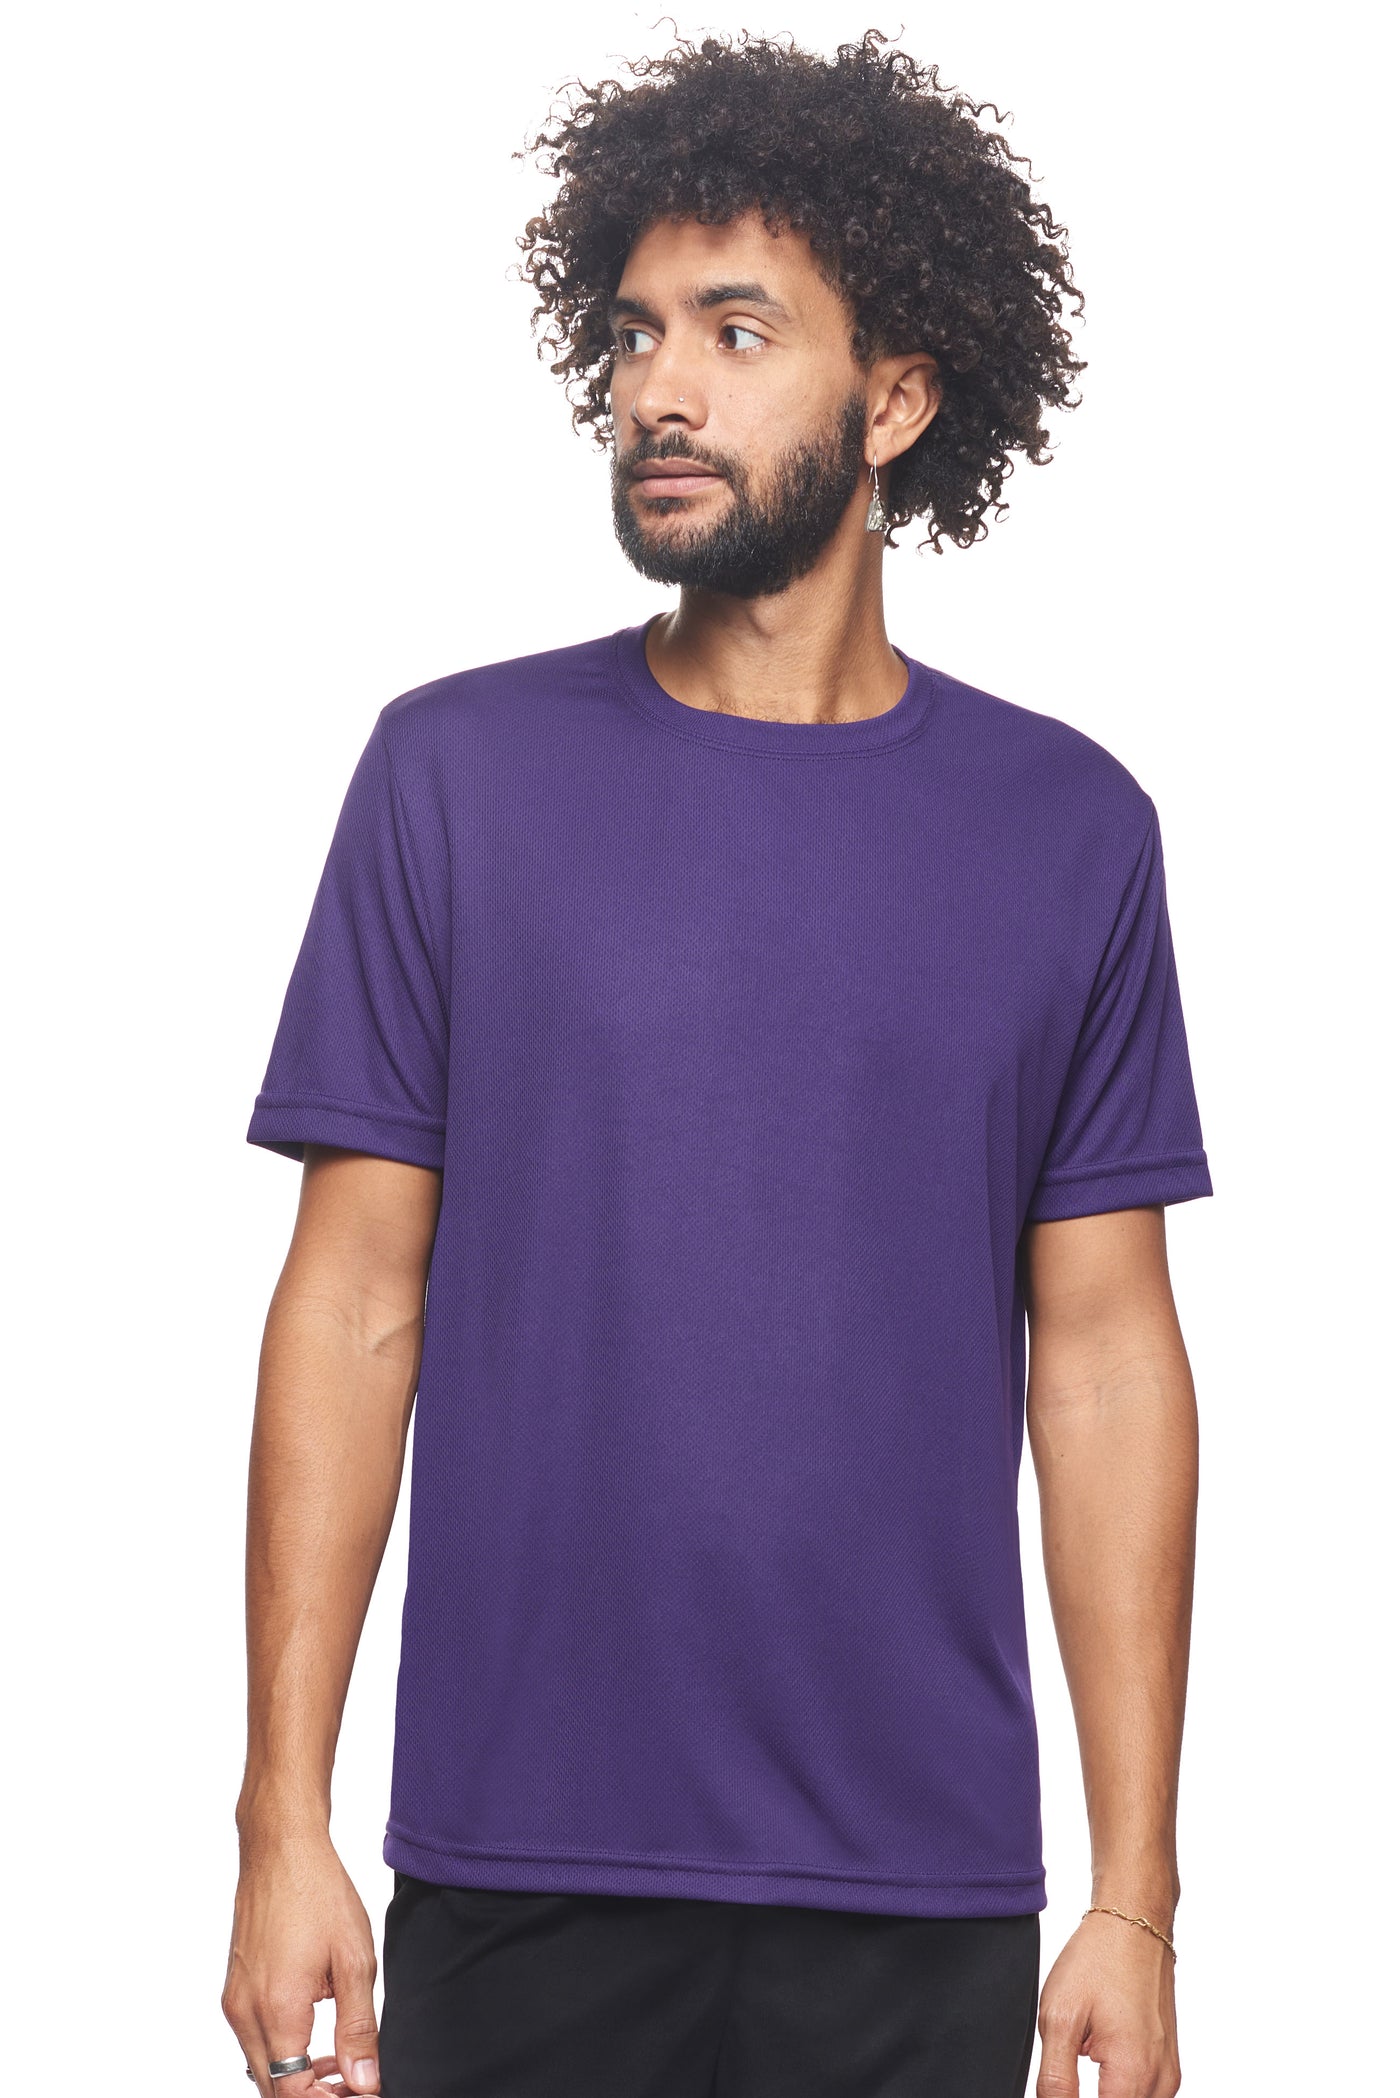 Expert Brand Retail Sportswear Men's Oxymesh Tec Tee Made in USA activewear Dark Purple#color_dark-purple